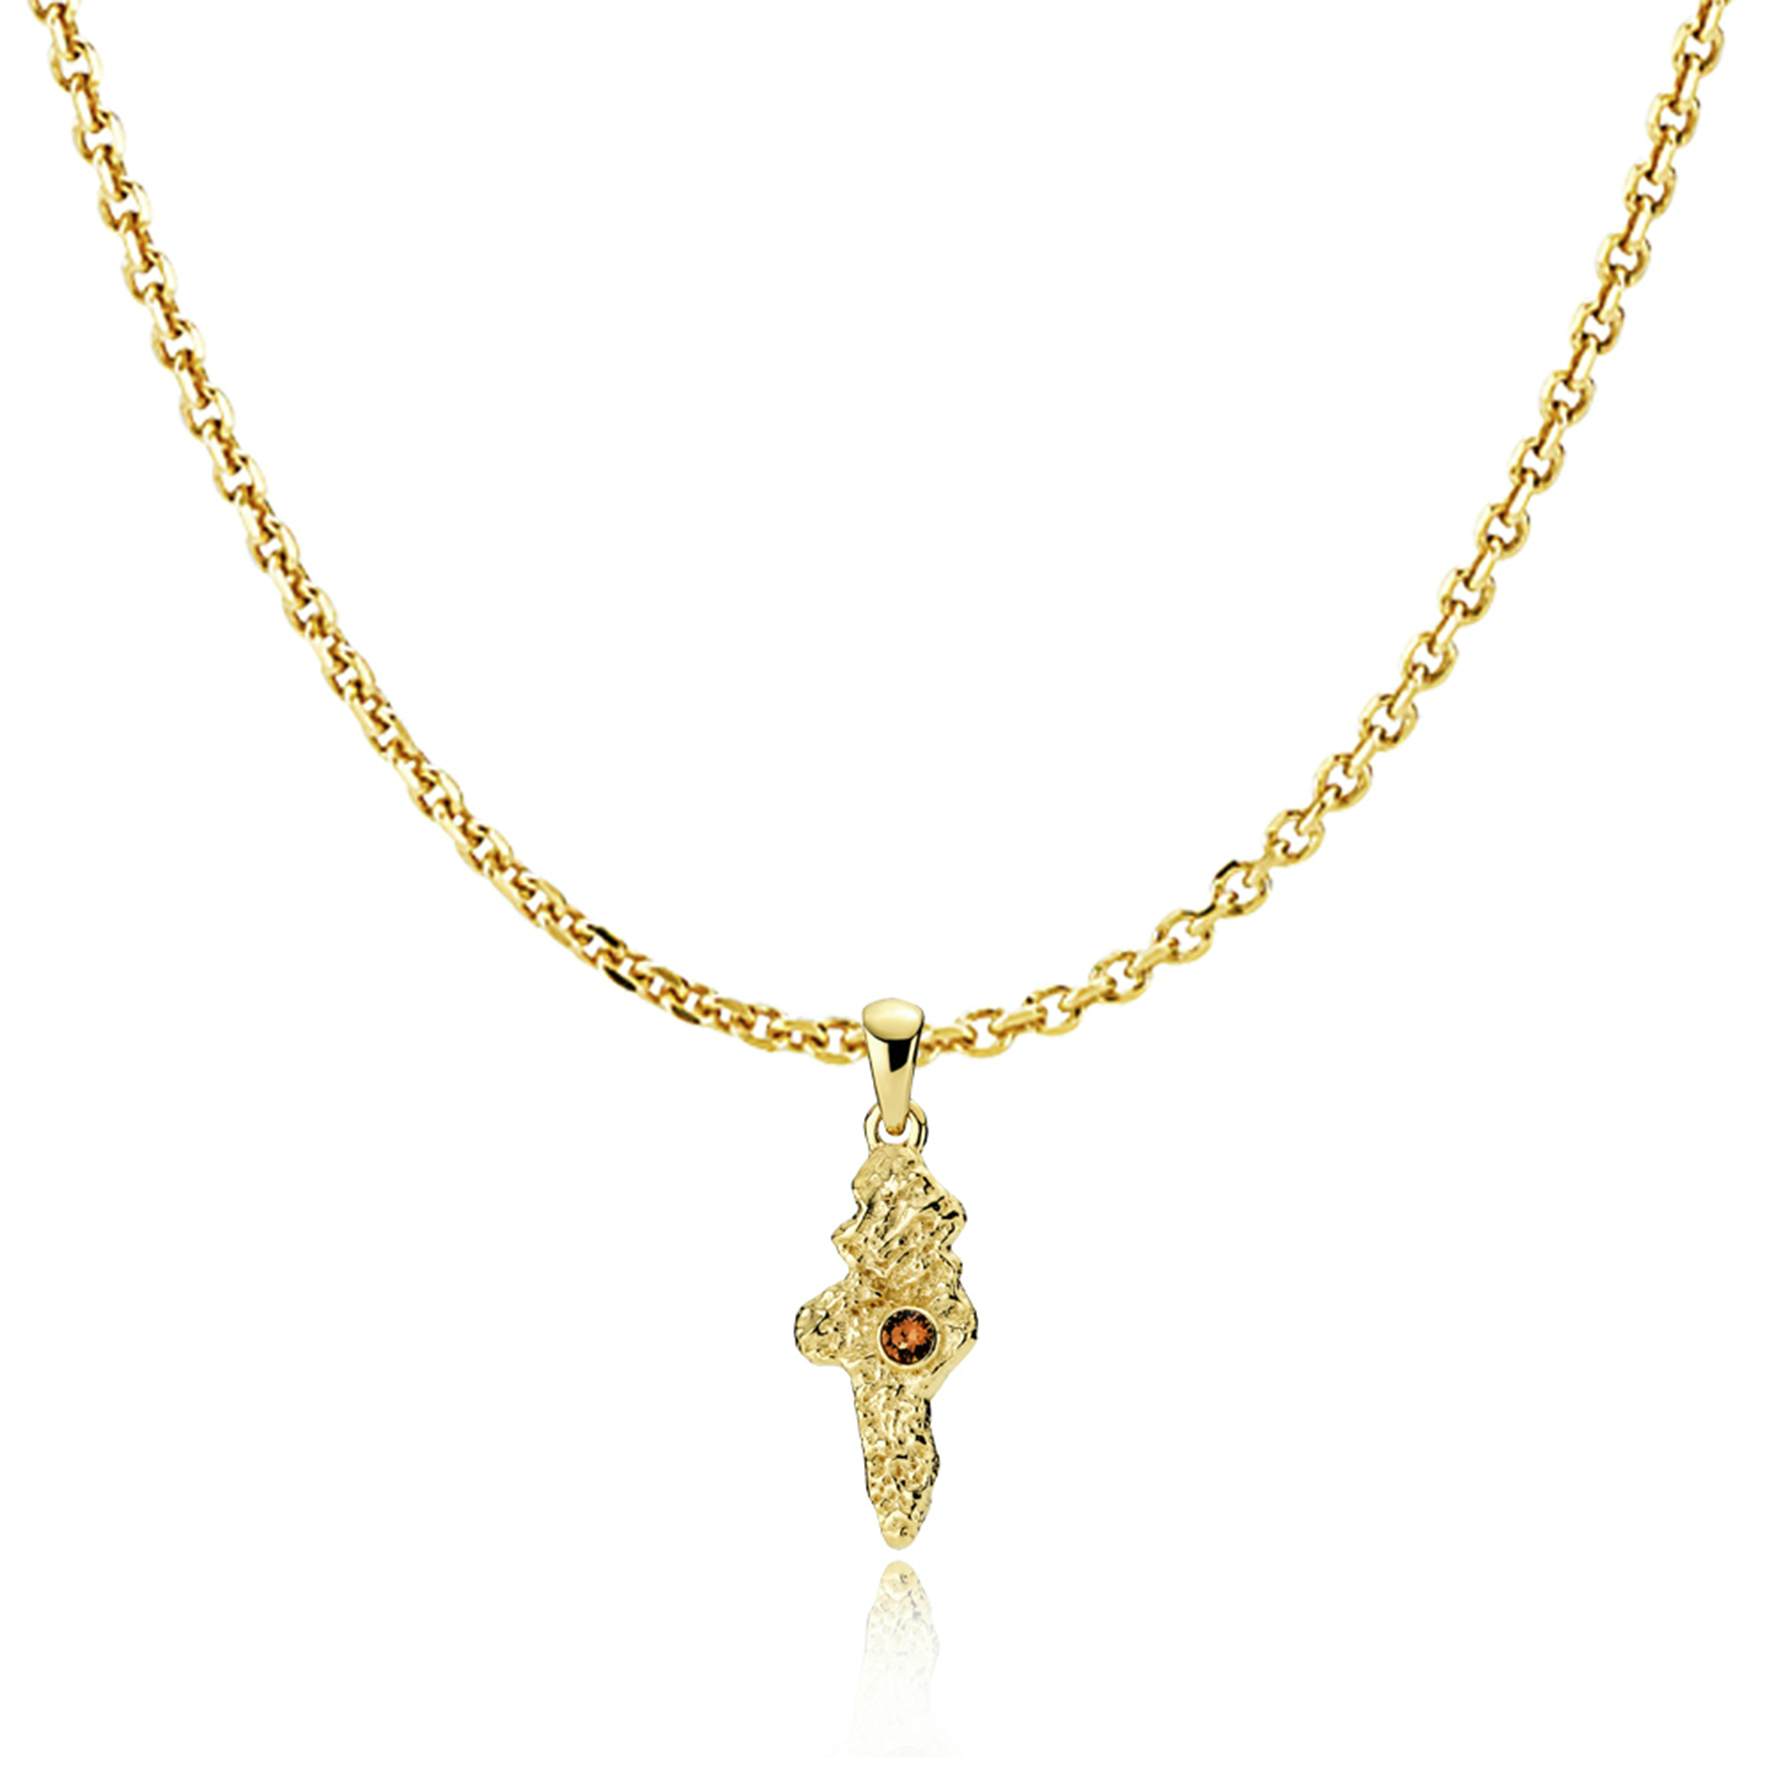 Silke By Sistie Pendant Necklace von Sistie in Vergoldet-Silber Sterling 925|Blank